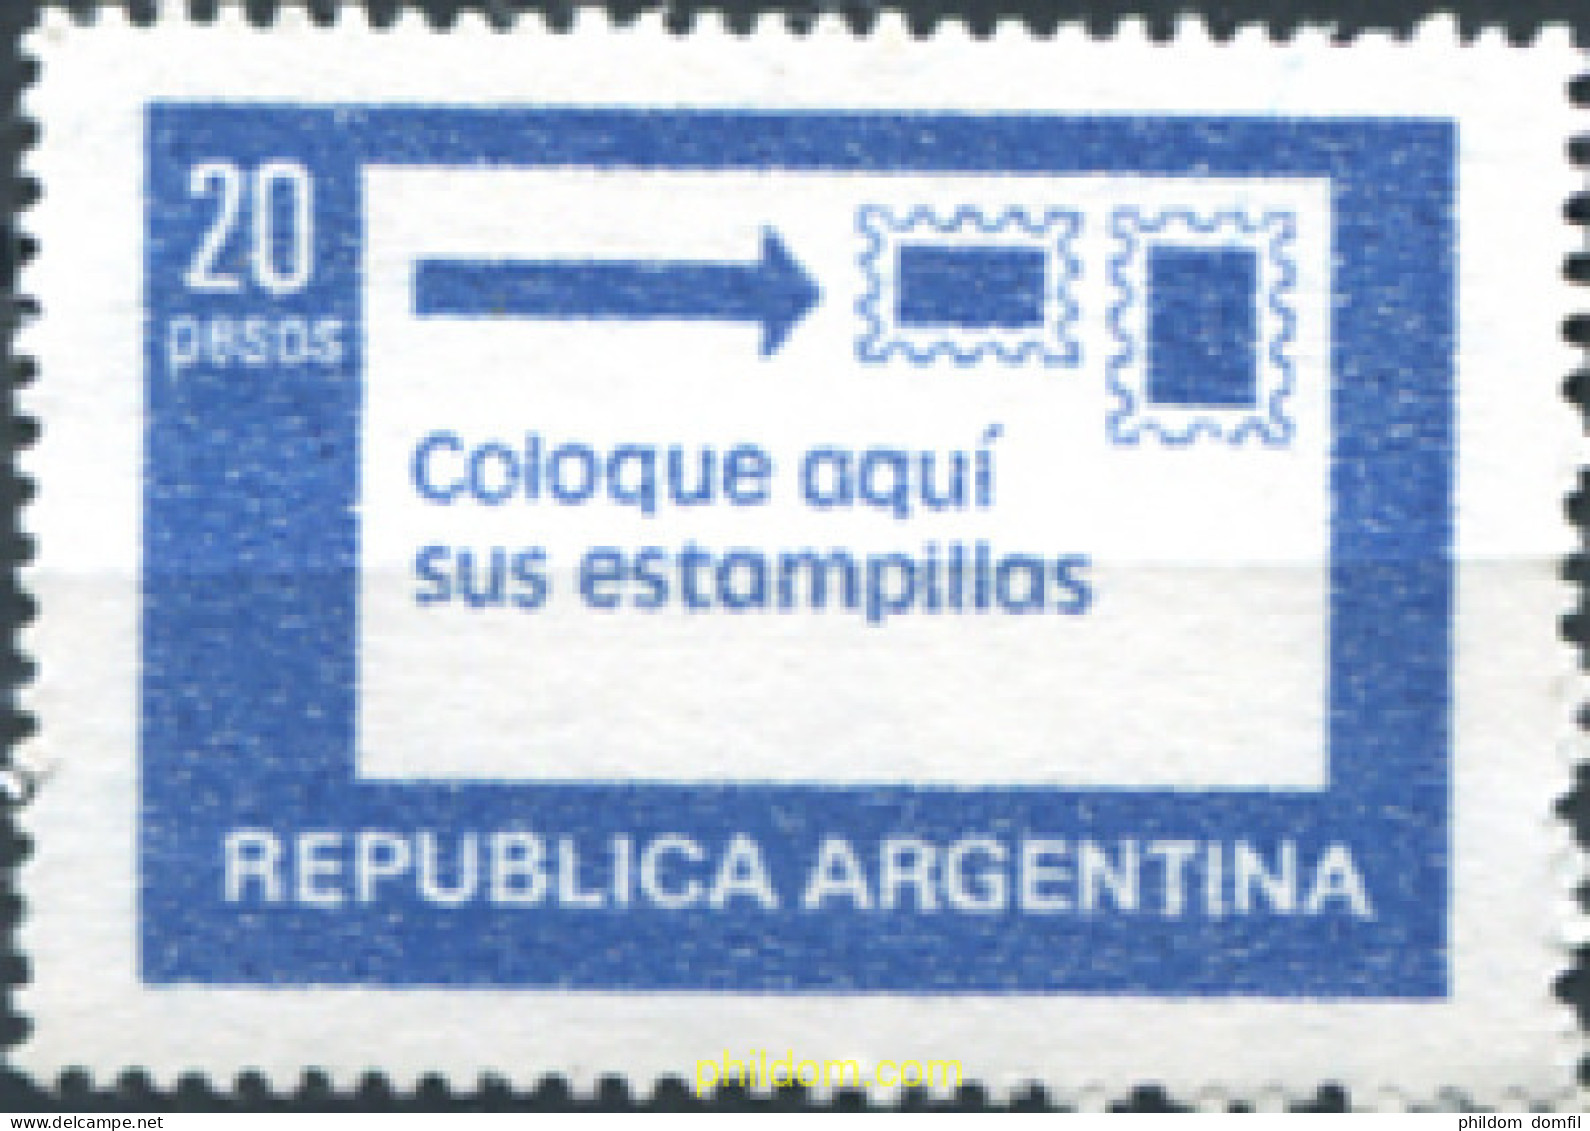 728916 MNH ARGENTINA 1978 SLOGAN POSTAL - Nuevos